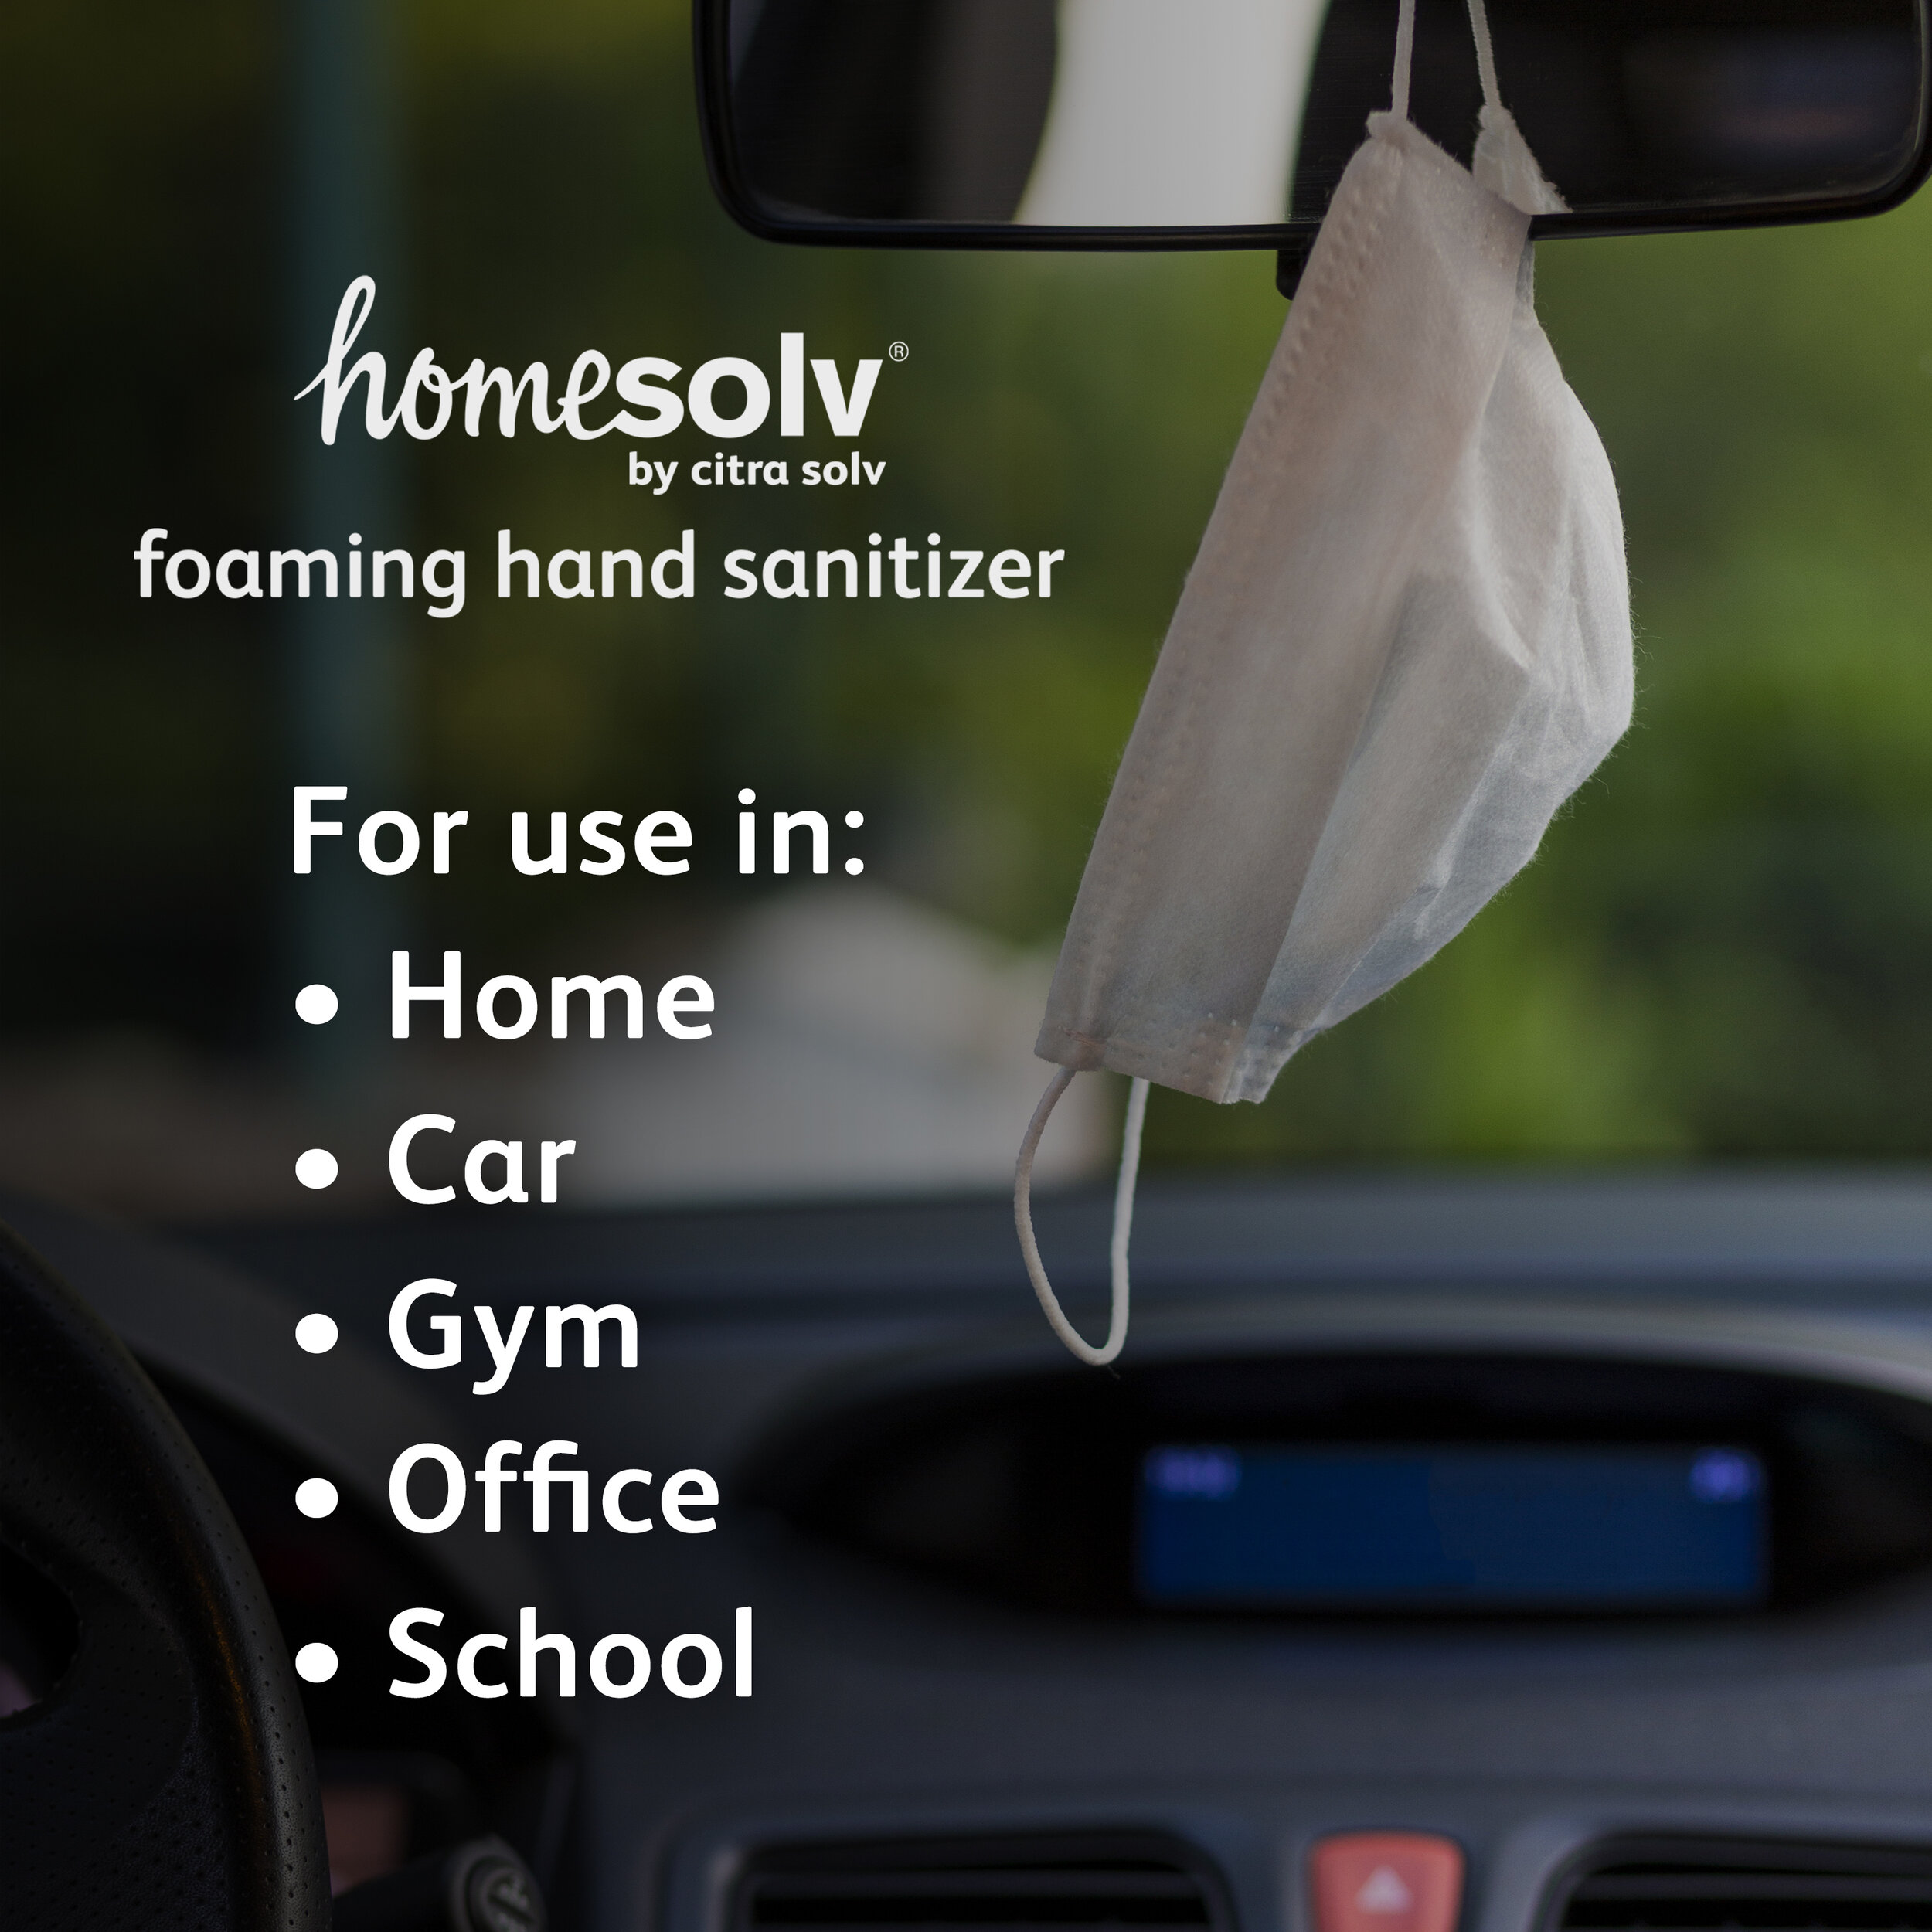 HS-Sanitizer-AmazonPic4.jpg